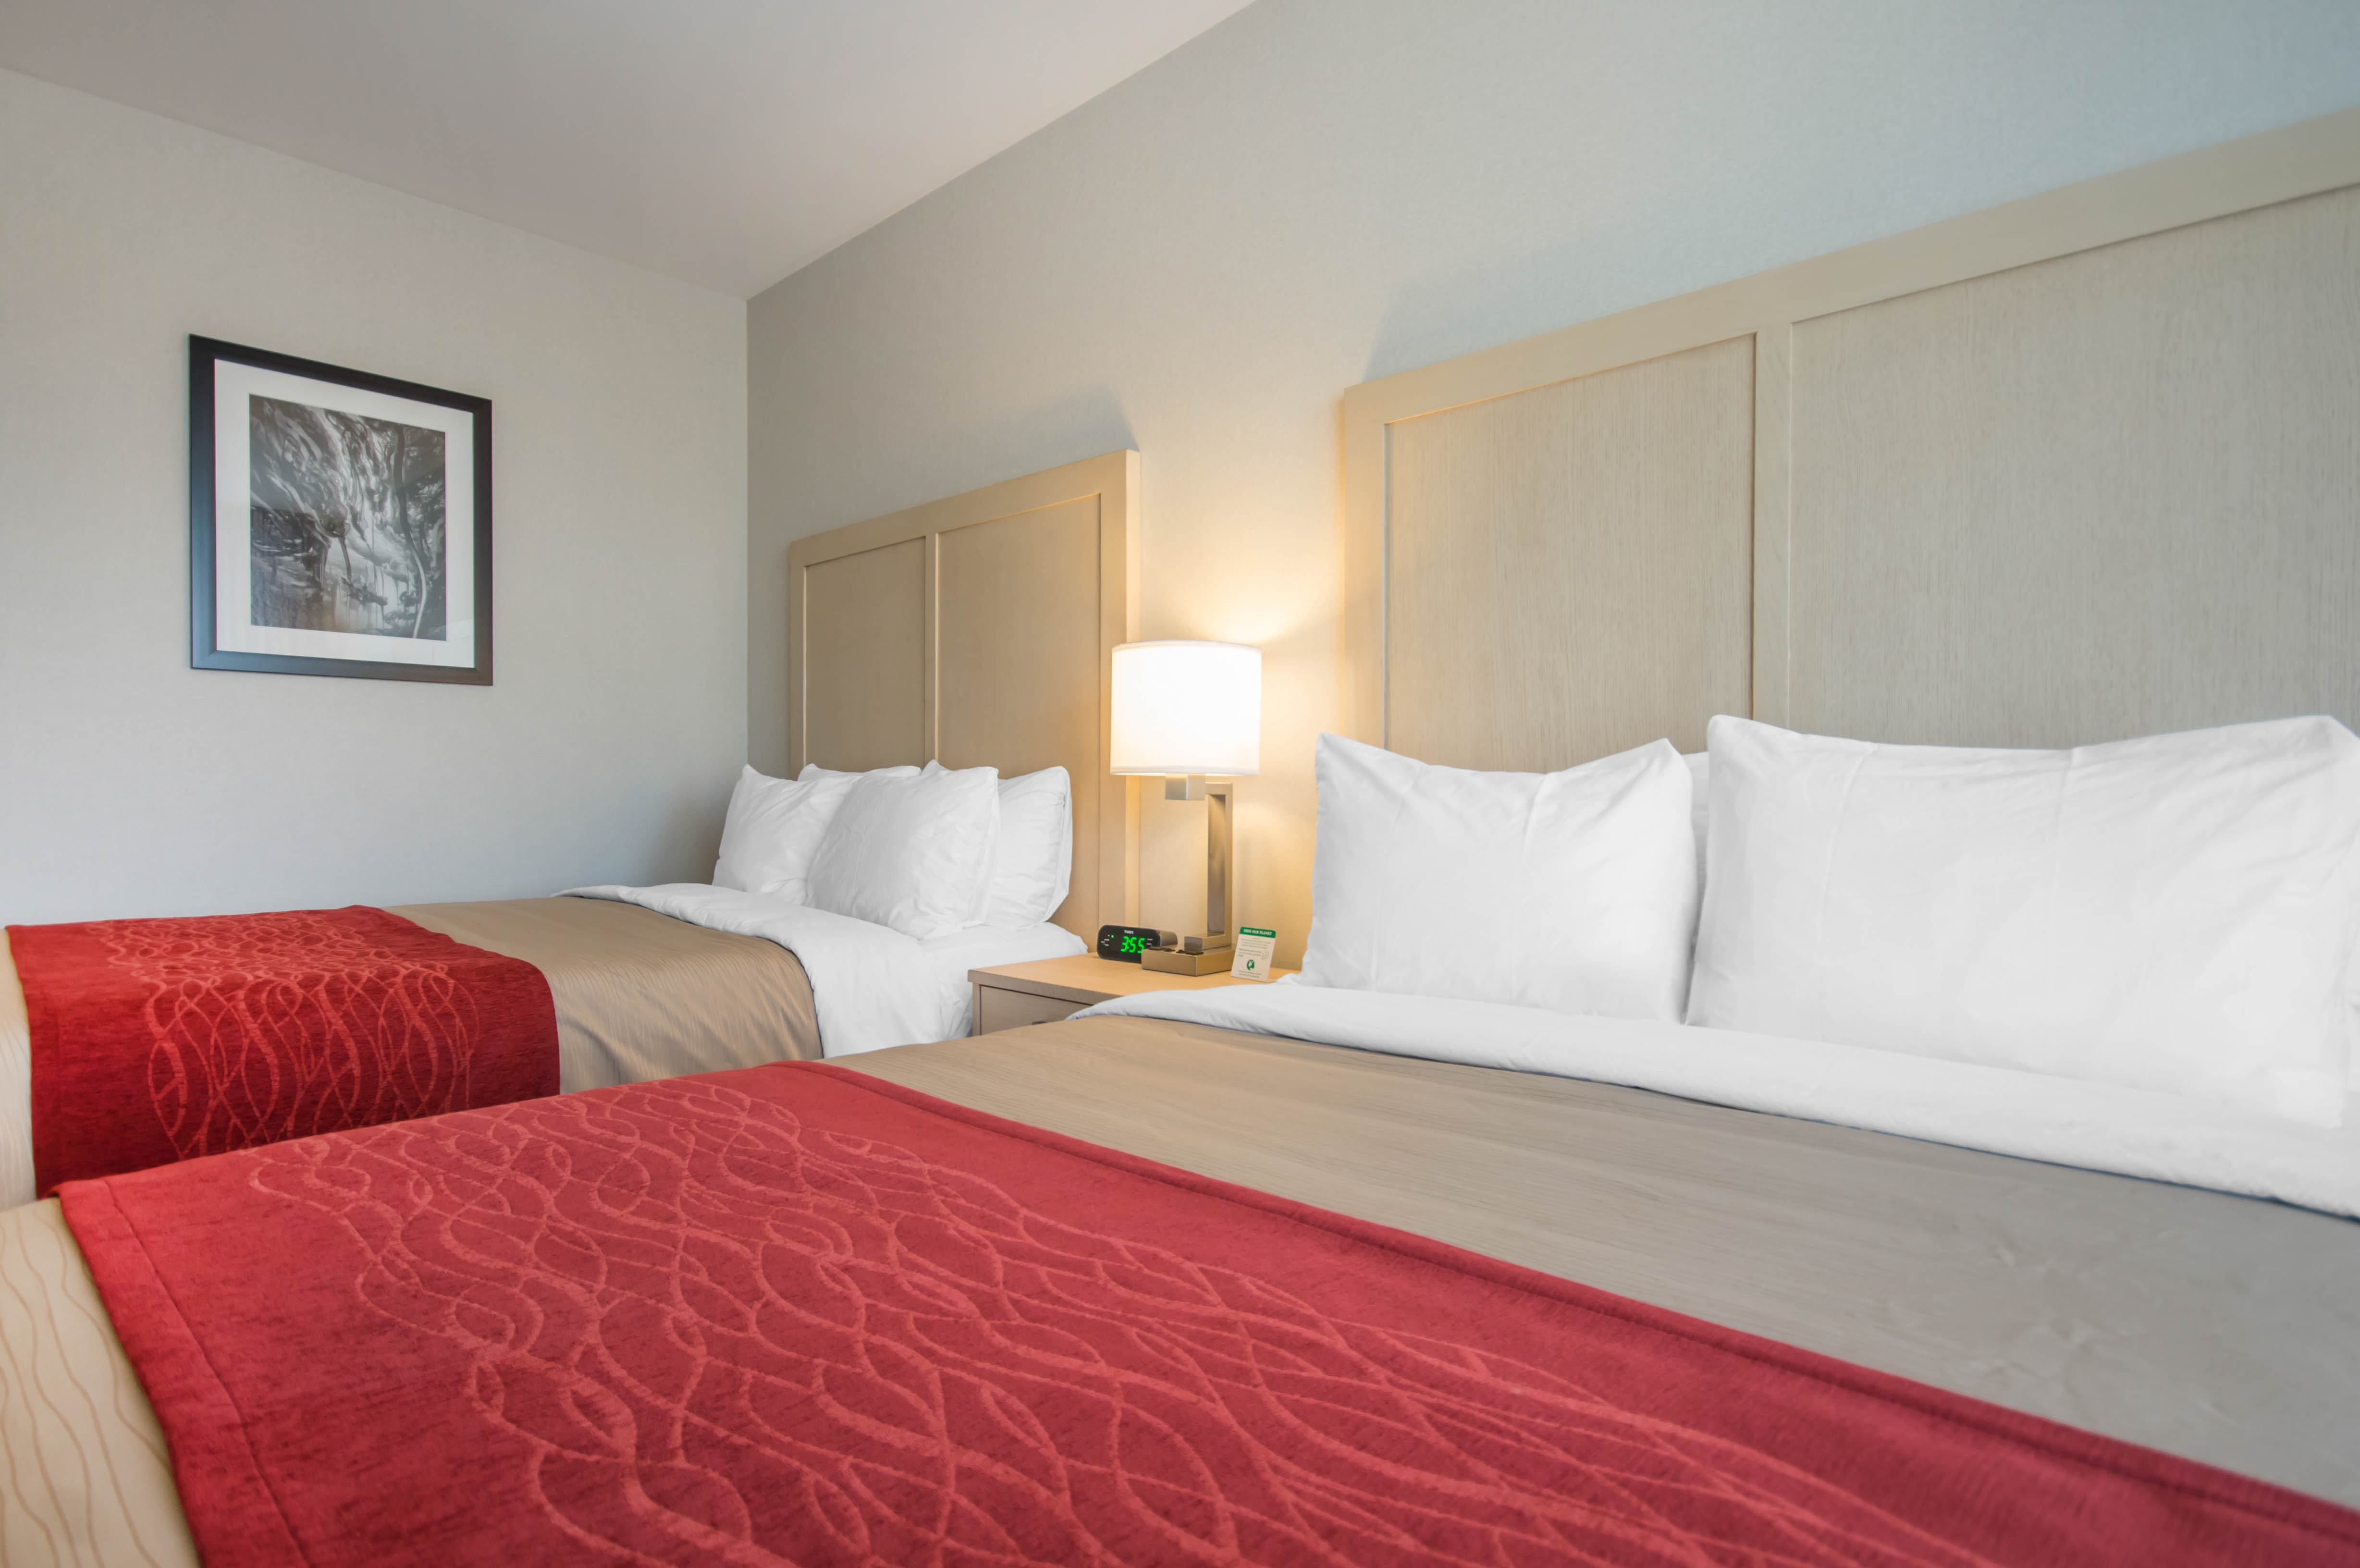 Comfort Inn & Suites Campbell River